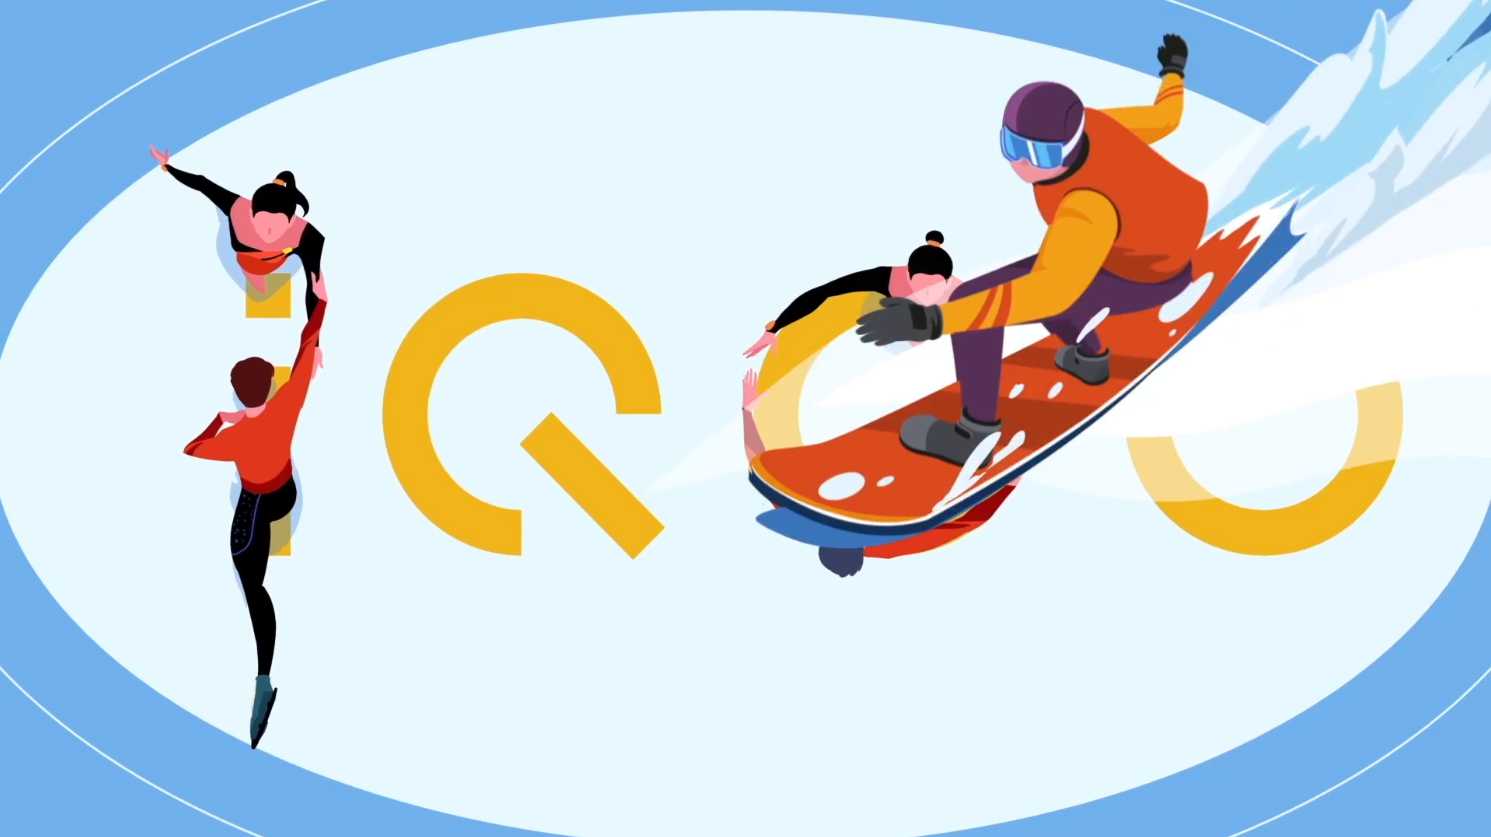 「iQOO助力2022北京冬奥会」逐帧动画